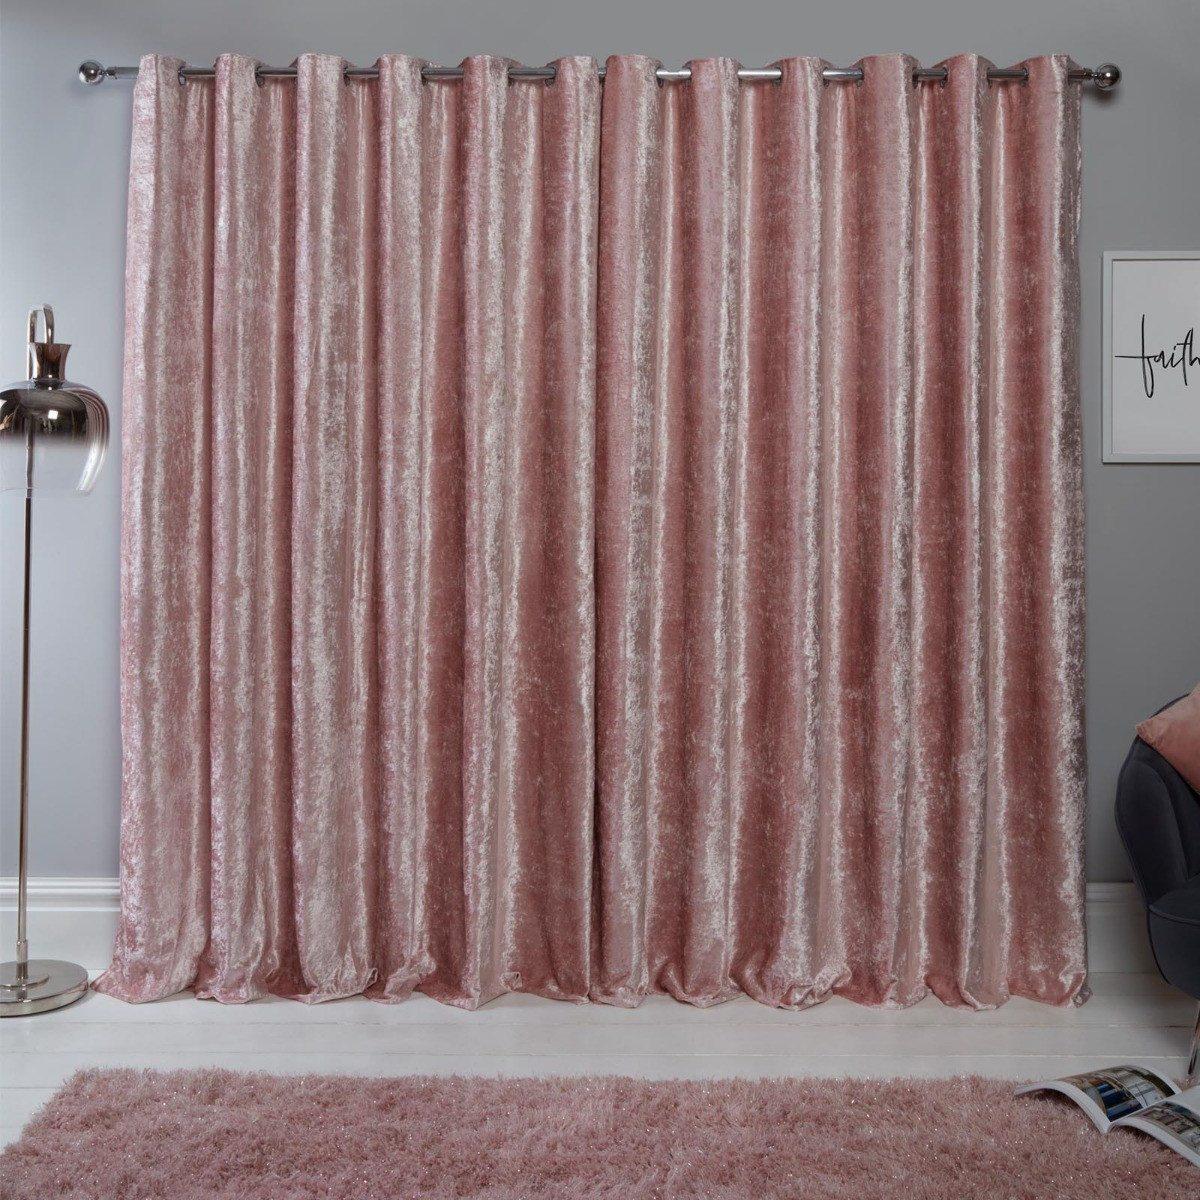 Sienna Home Crushed Velvet Eyelet Curtains, Blush Pink - 90" x 72">